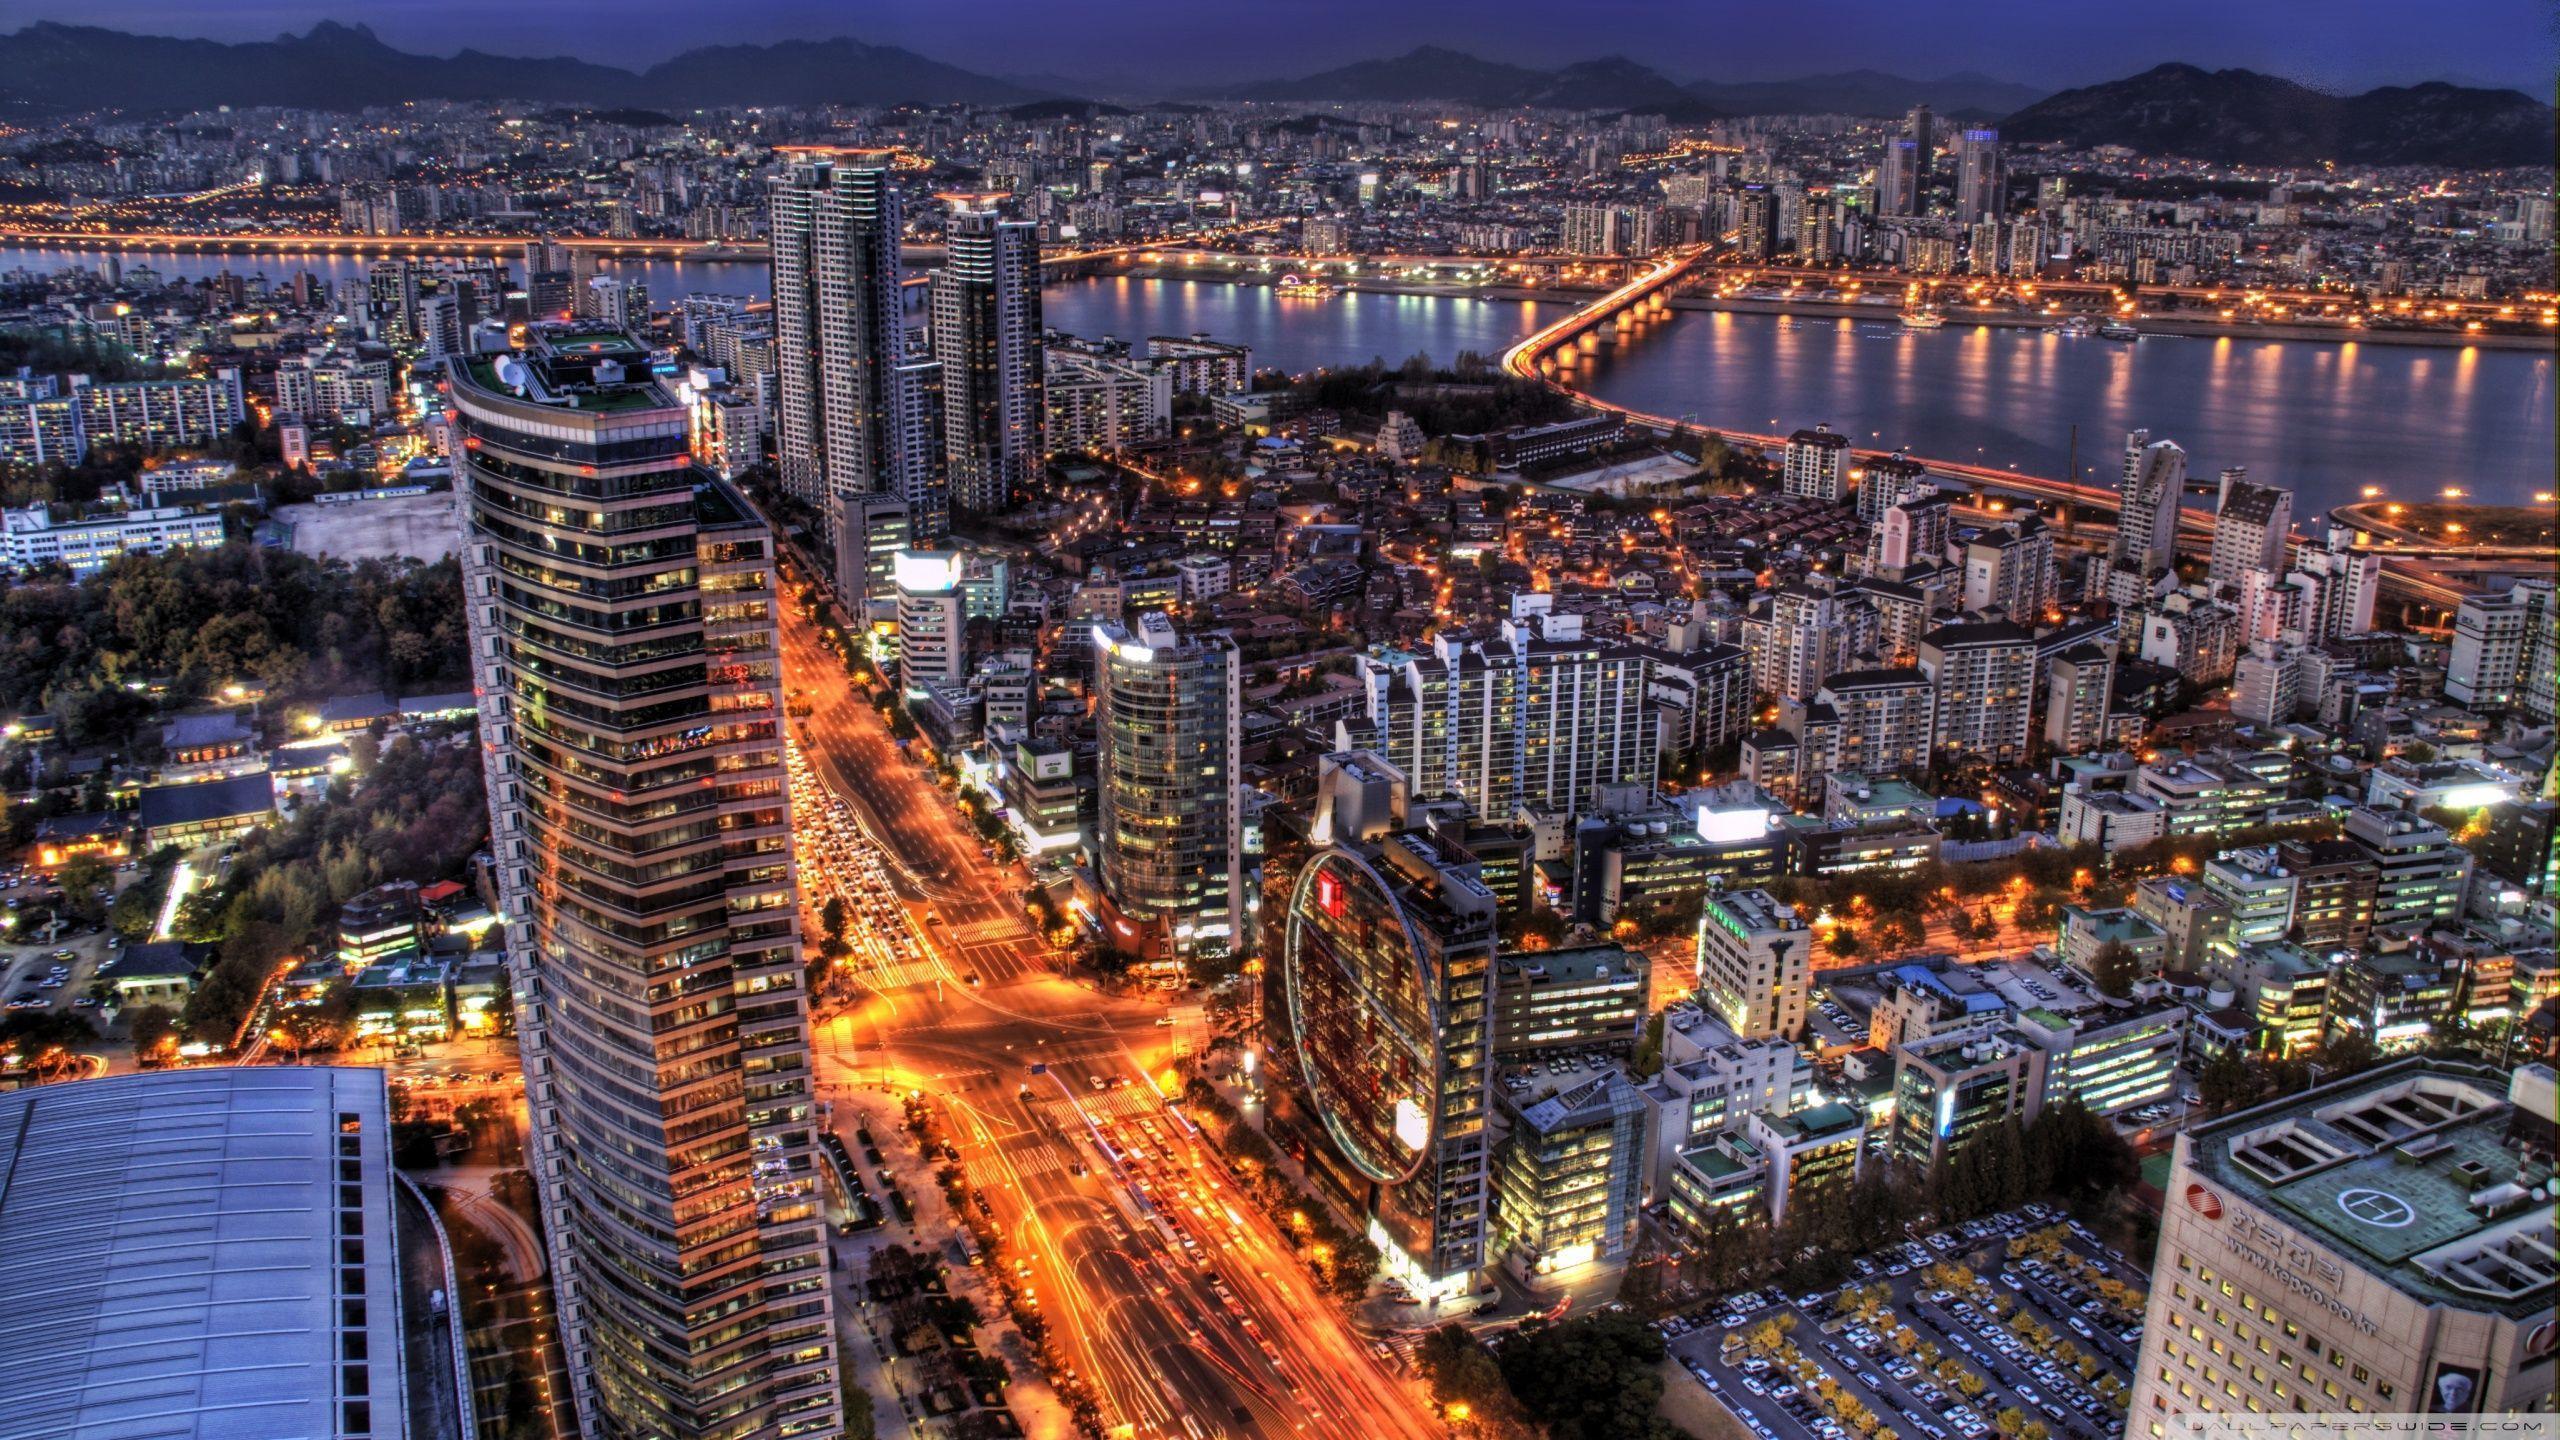 Seoul At Night, South Korea HD desktop wallpaper, High Definition